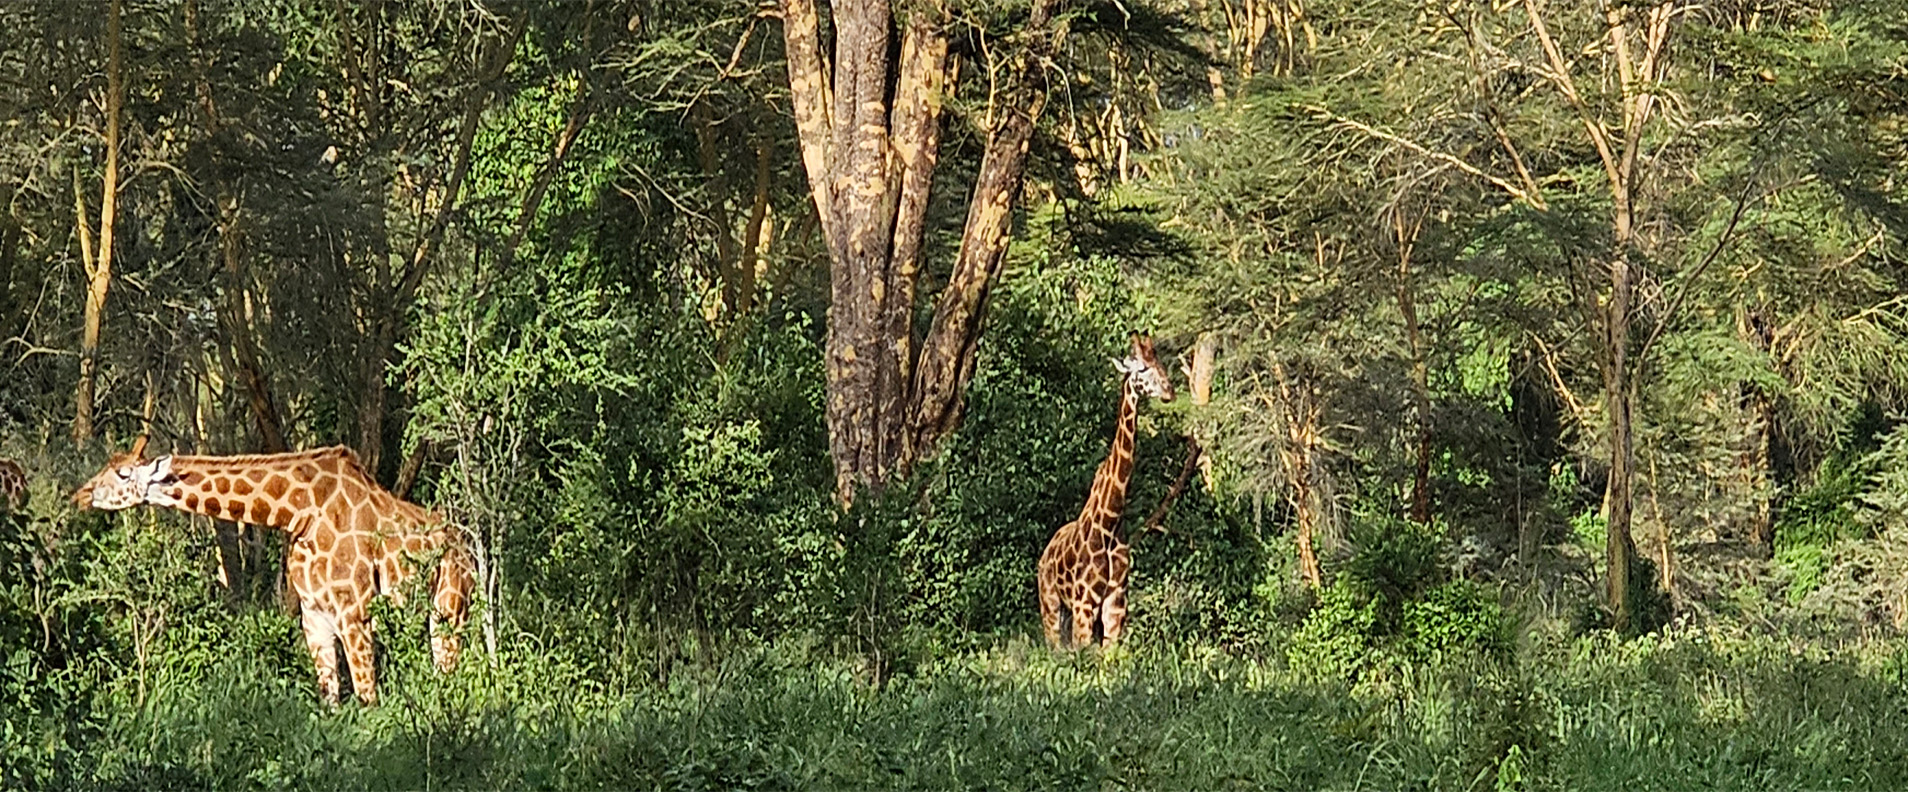 Giraffes on Safari